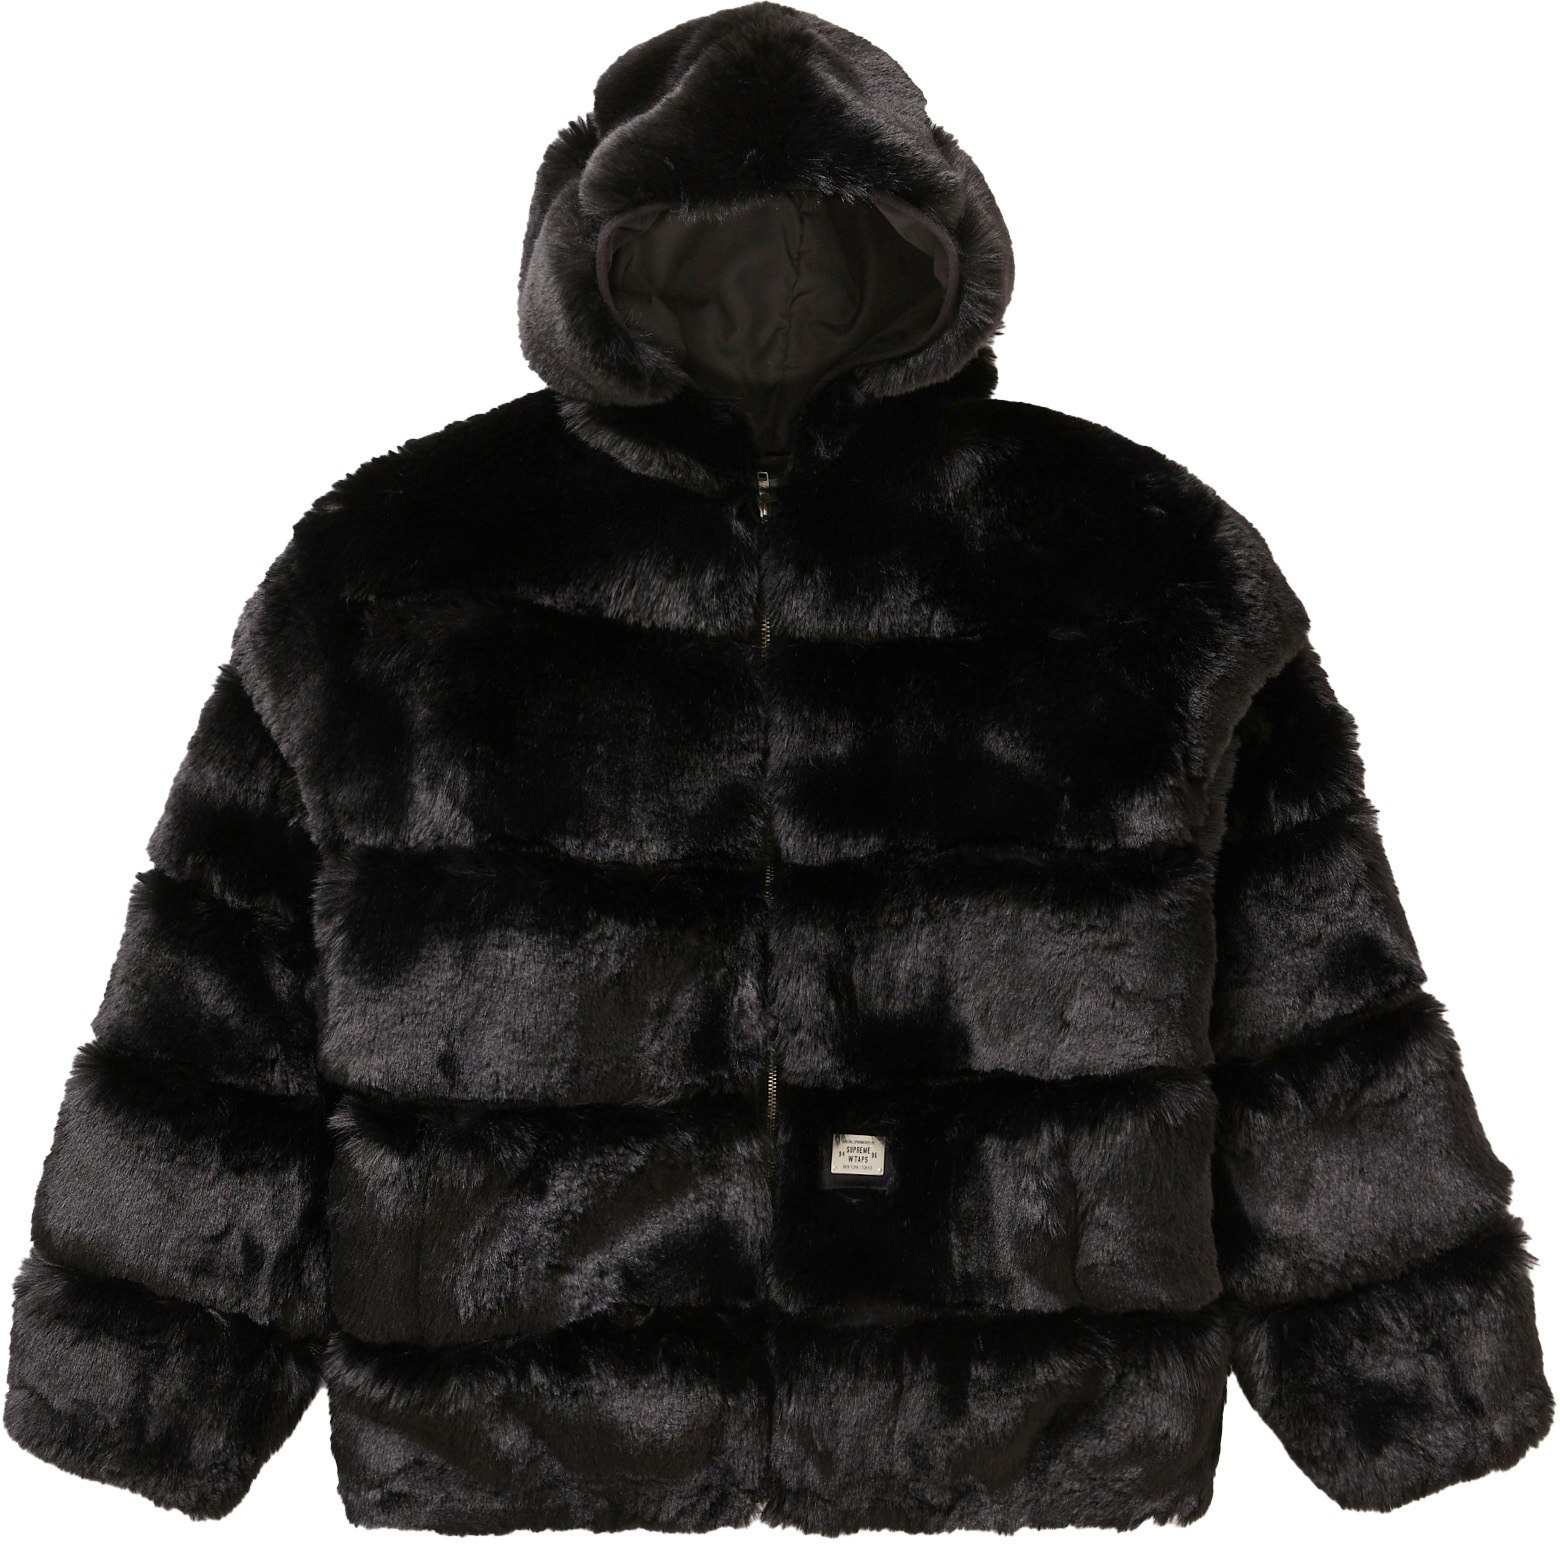 Supreme x WTAPS Faux Fur Hooded Jacket Black - Novelship